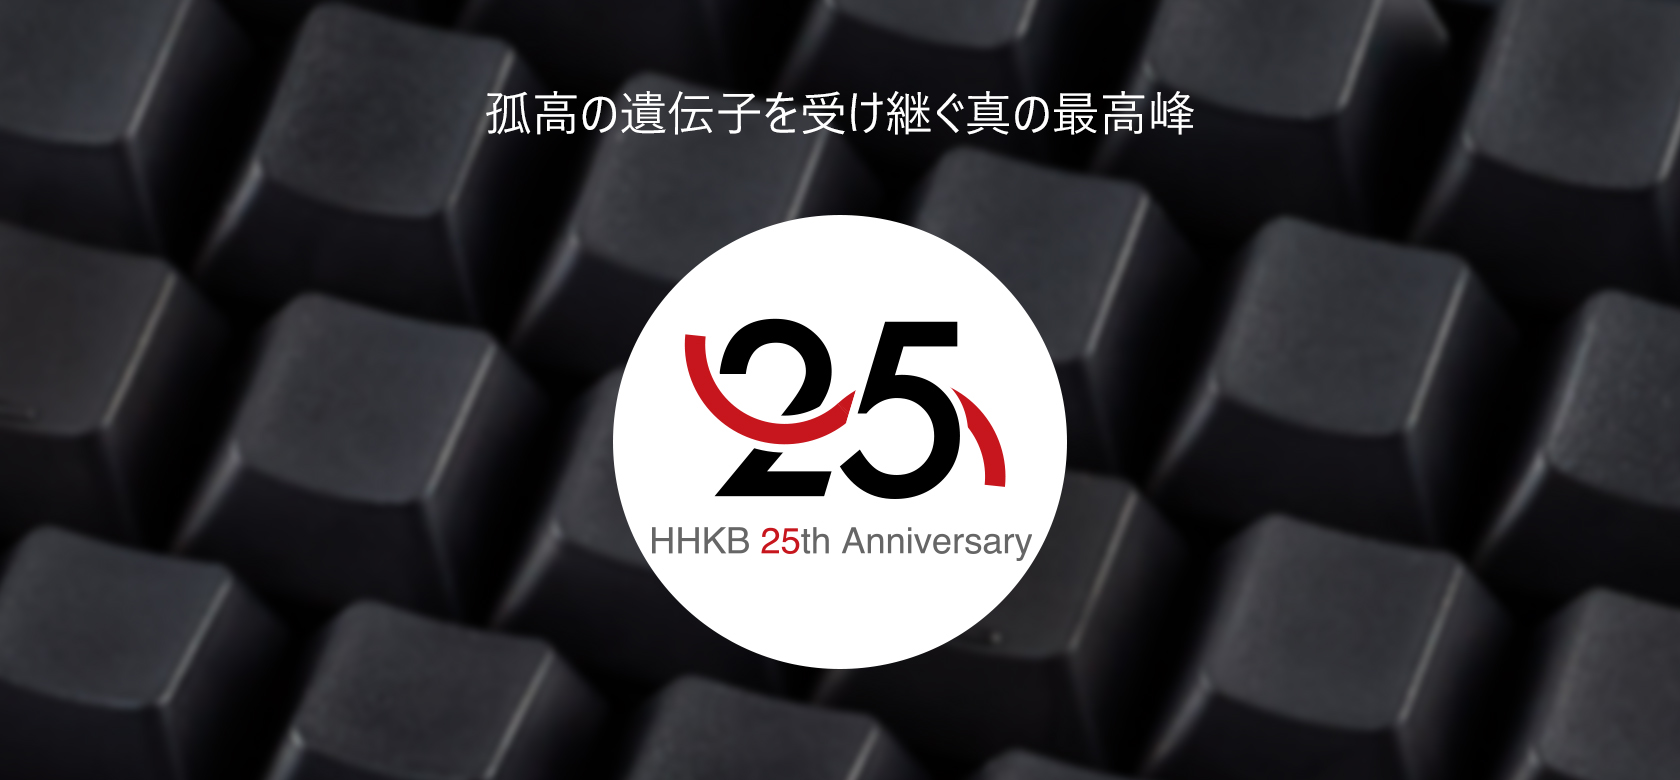 HHKB 25th Anniversary